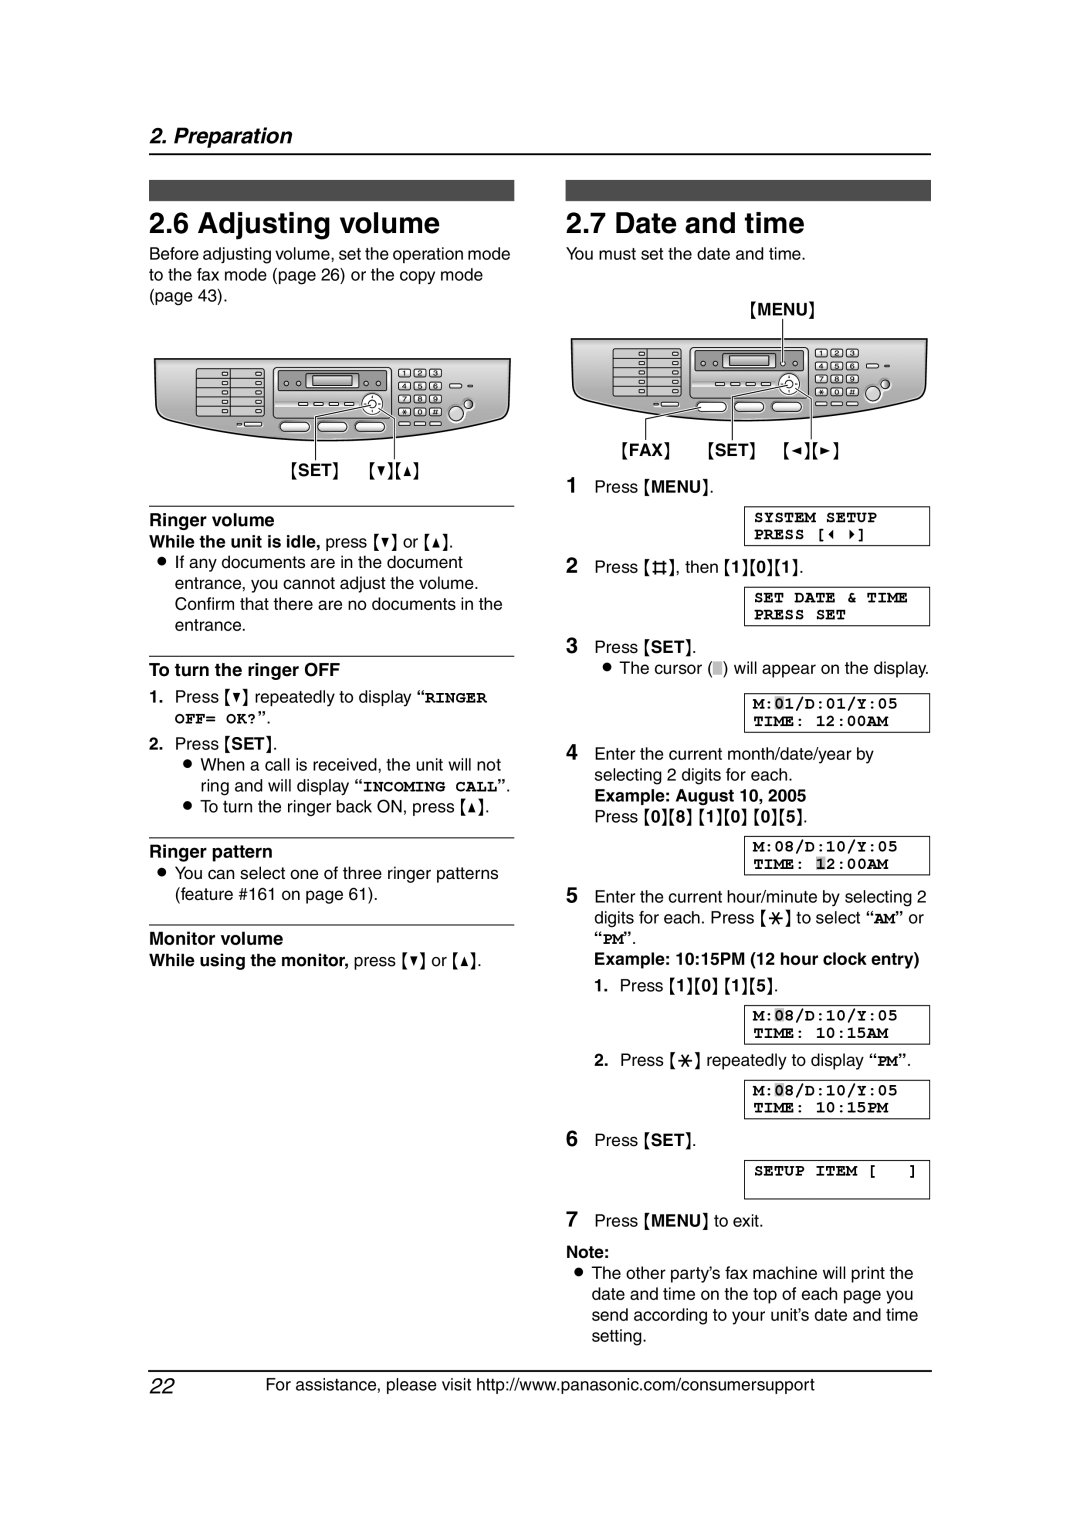 Panasonic KX-FLB851 Adjusting volume, Date and time, Ringer volume While the unit is idle, press V or, Ringer pattern 